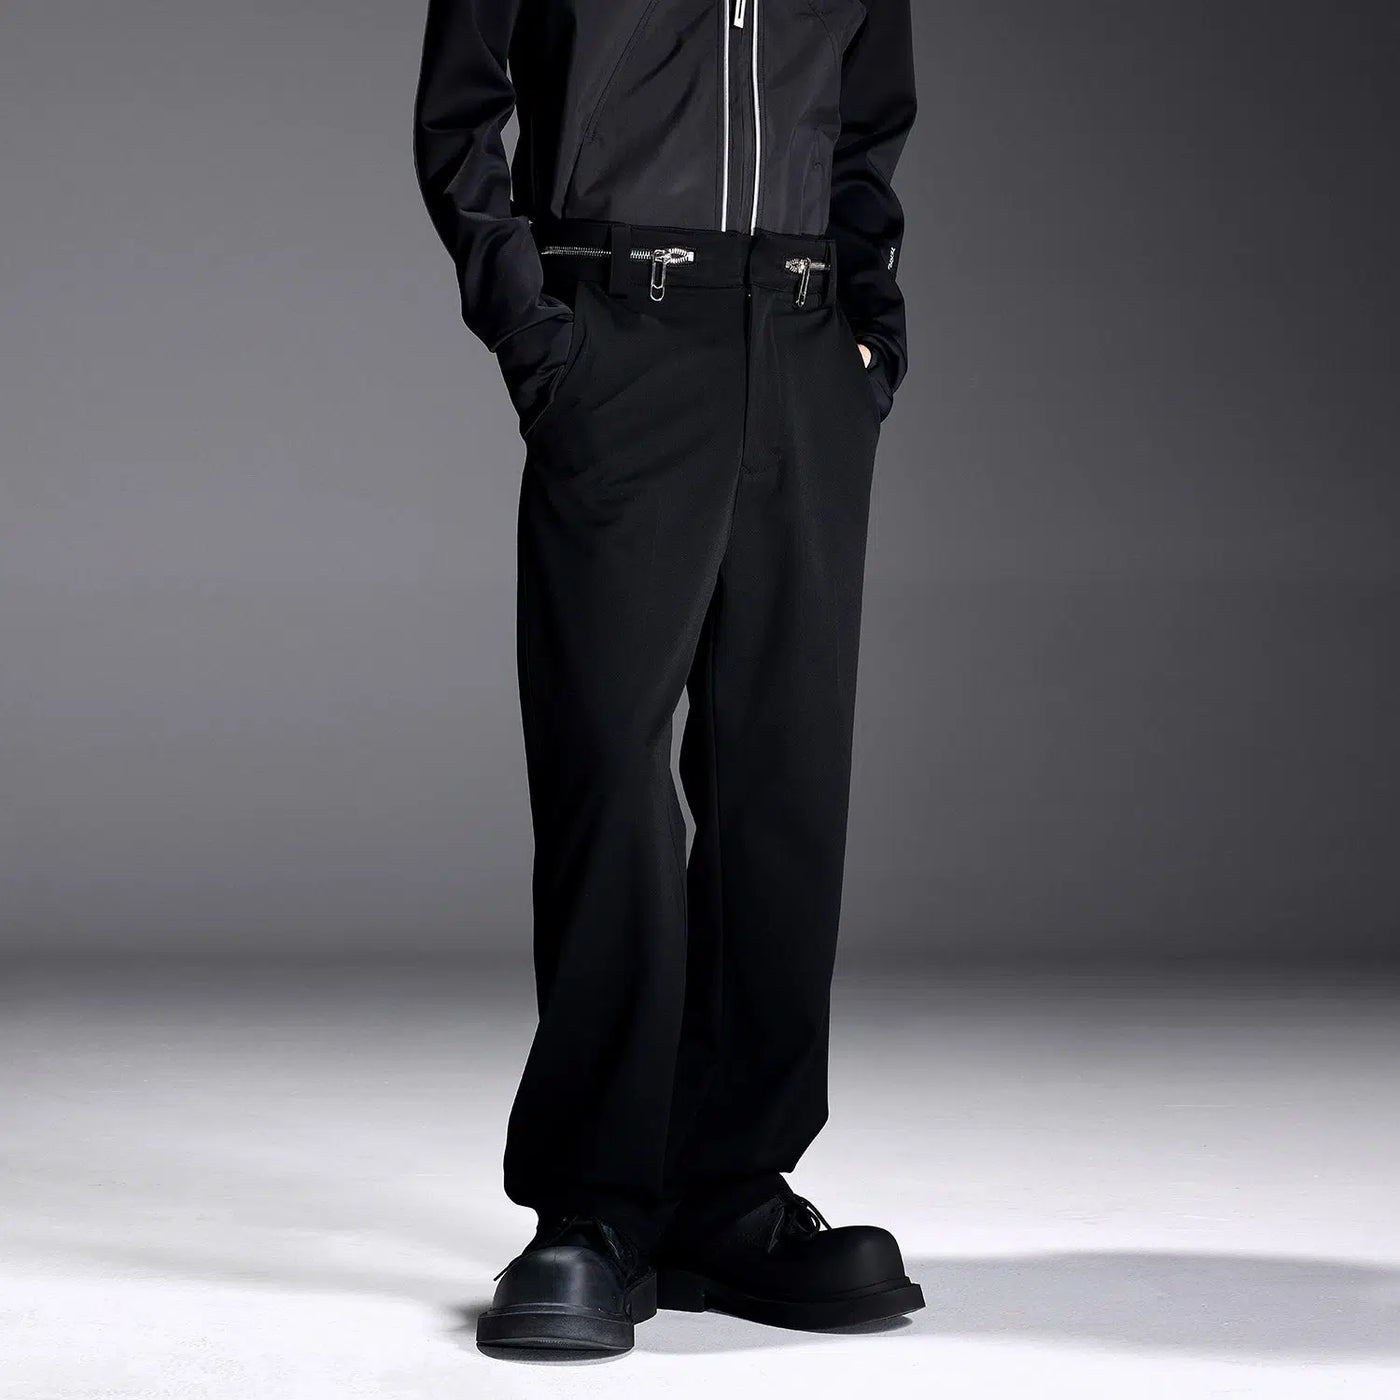 Irregular Waist Zipper Detail Pants Korean Street Fashion Pants By Terra Incognita Shop Online at OH Vault